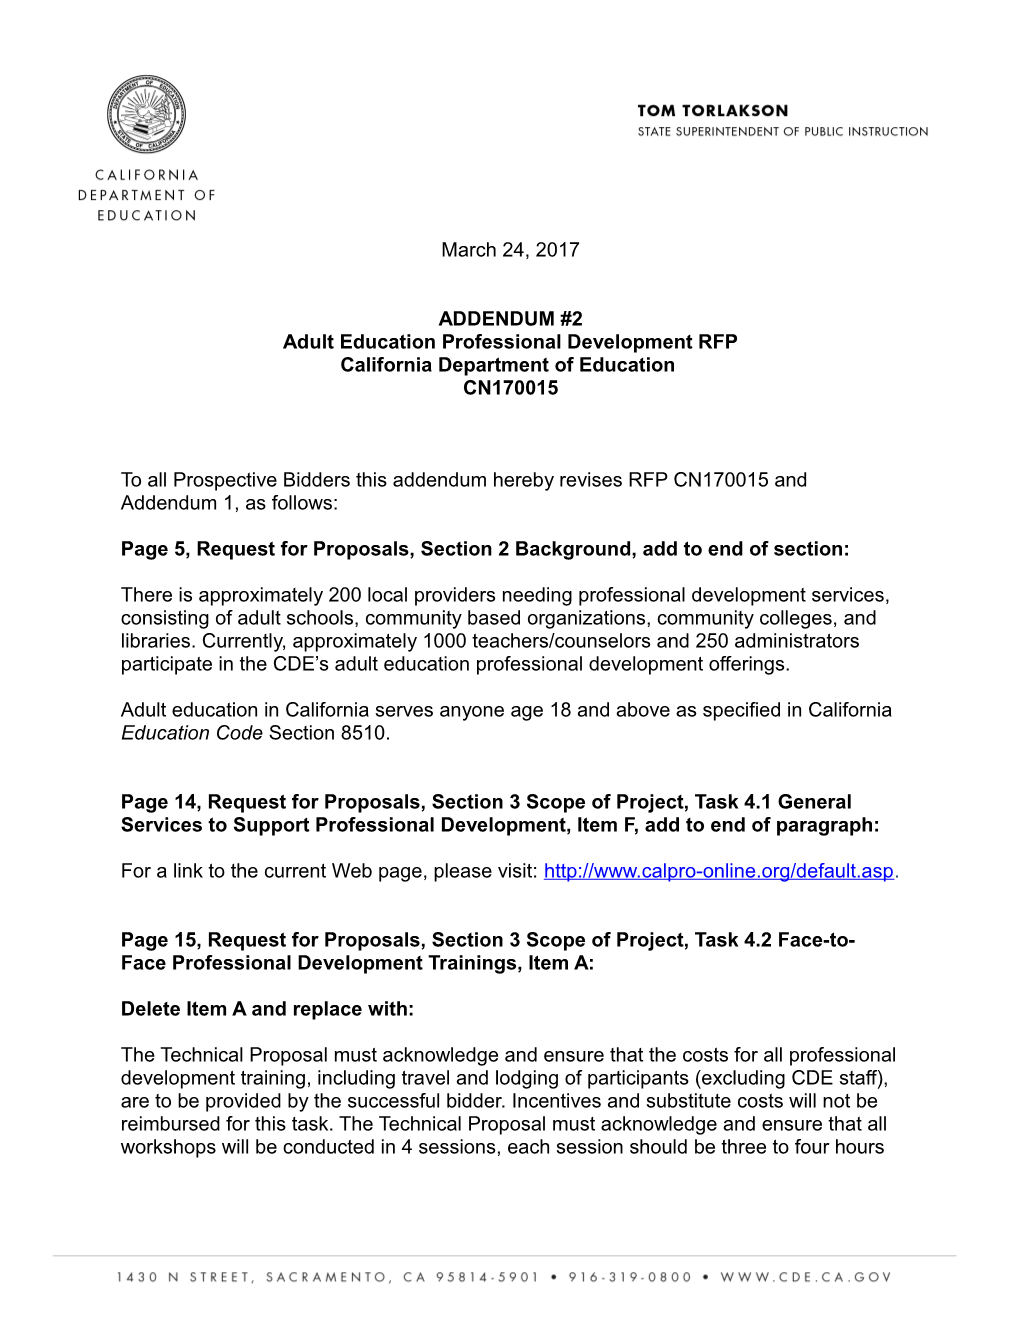 RFP - AE Professional Development (CA Dept of Education)